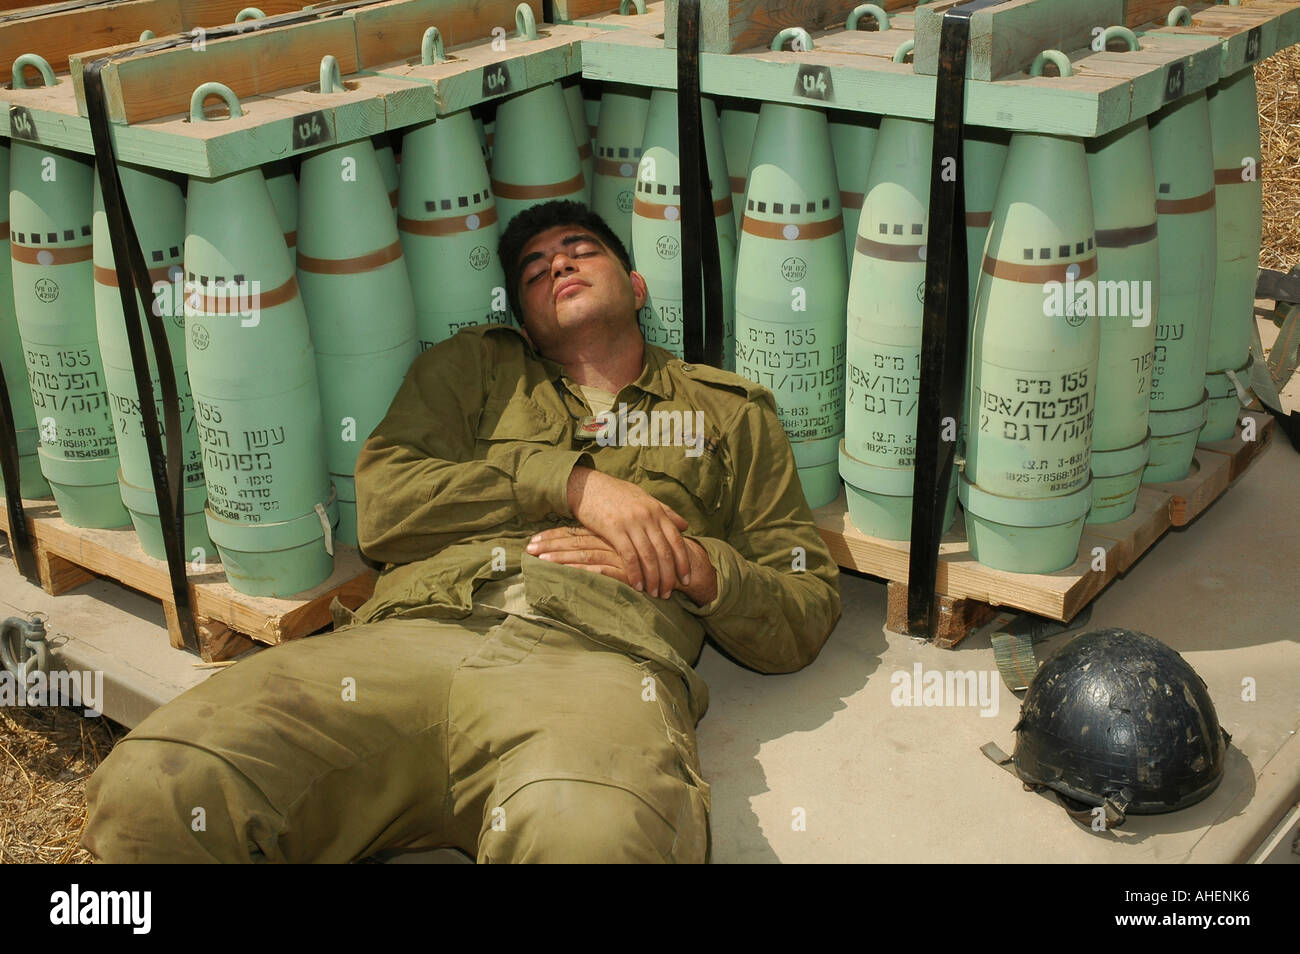 http://c8.alamy.com/comp/AHENK6/idf-israeli-soldier-sleeping-on-155mm-artillery-shells-at-the-golan-AHENK6.jpg